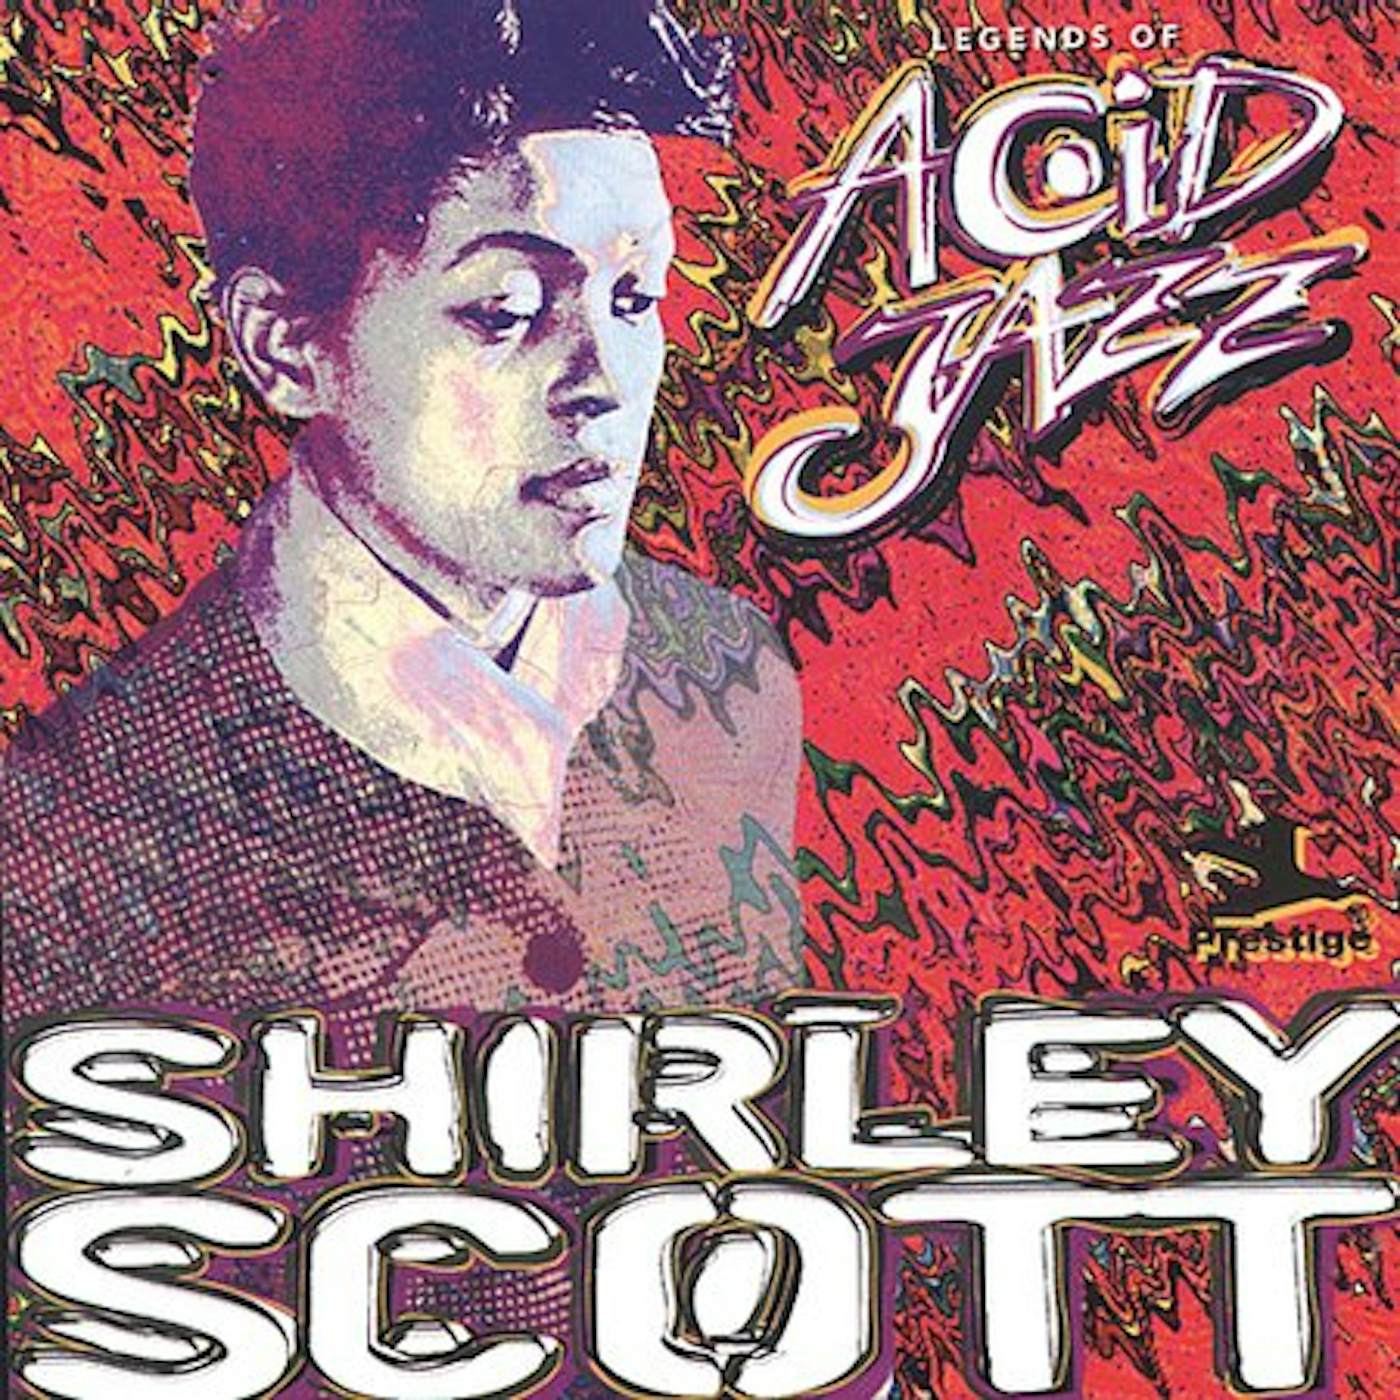 Shirley Scott LEGENDS OF ACID JAZZ CD